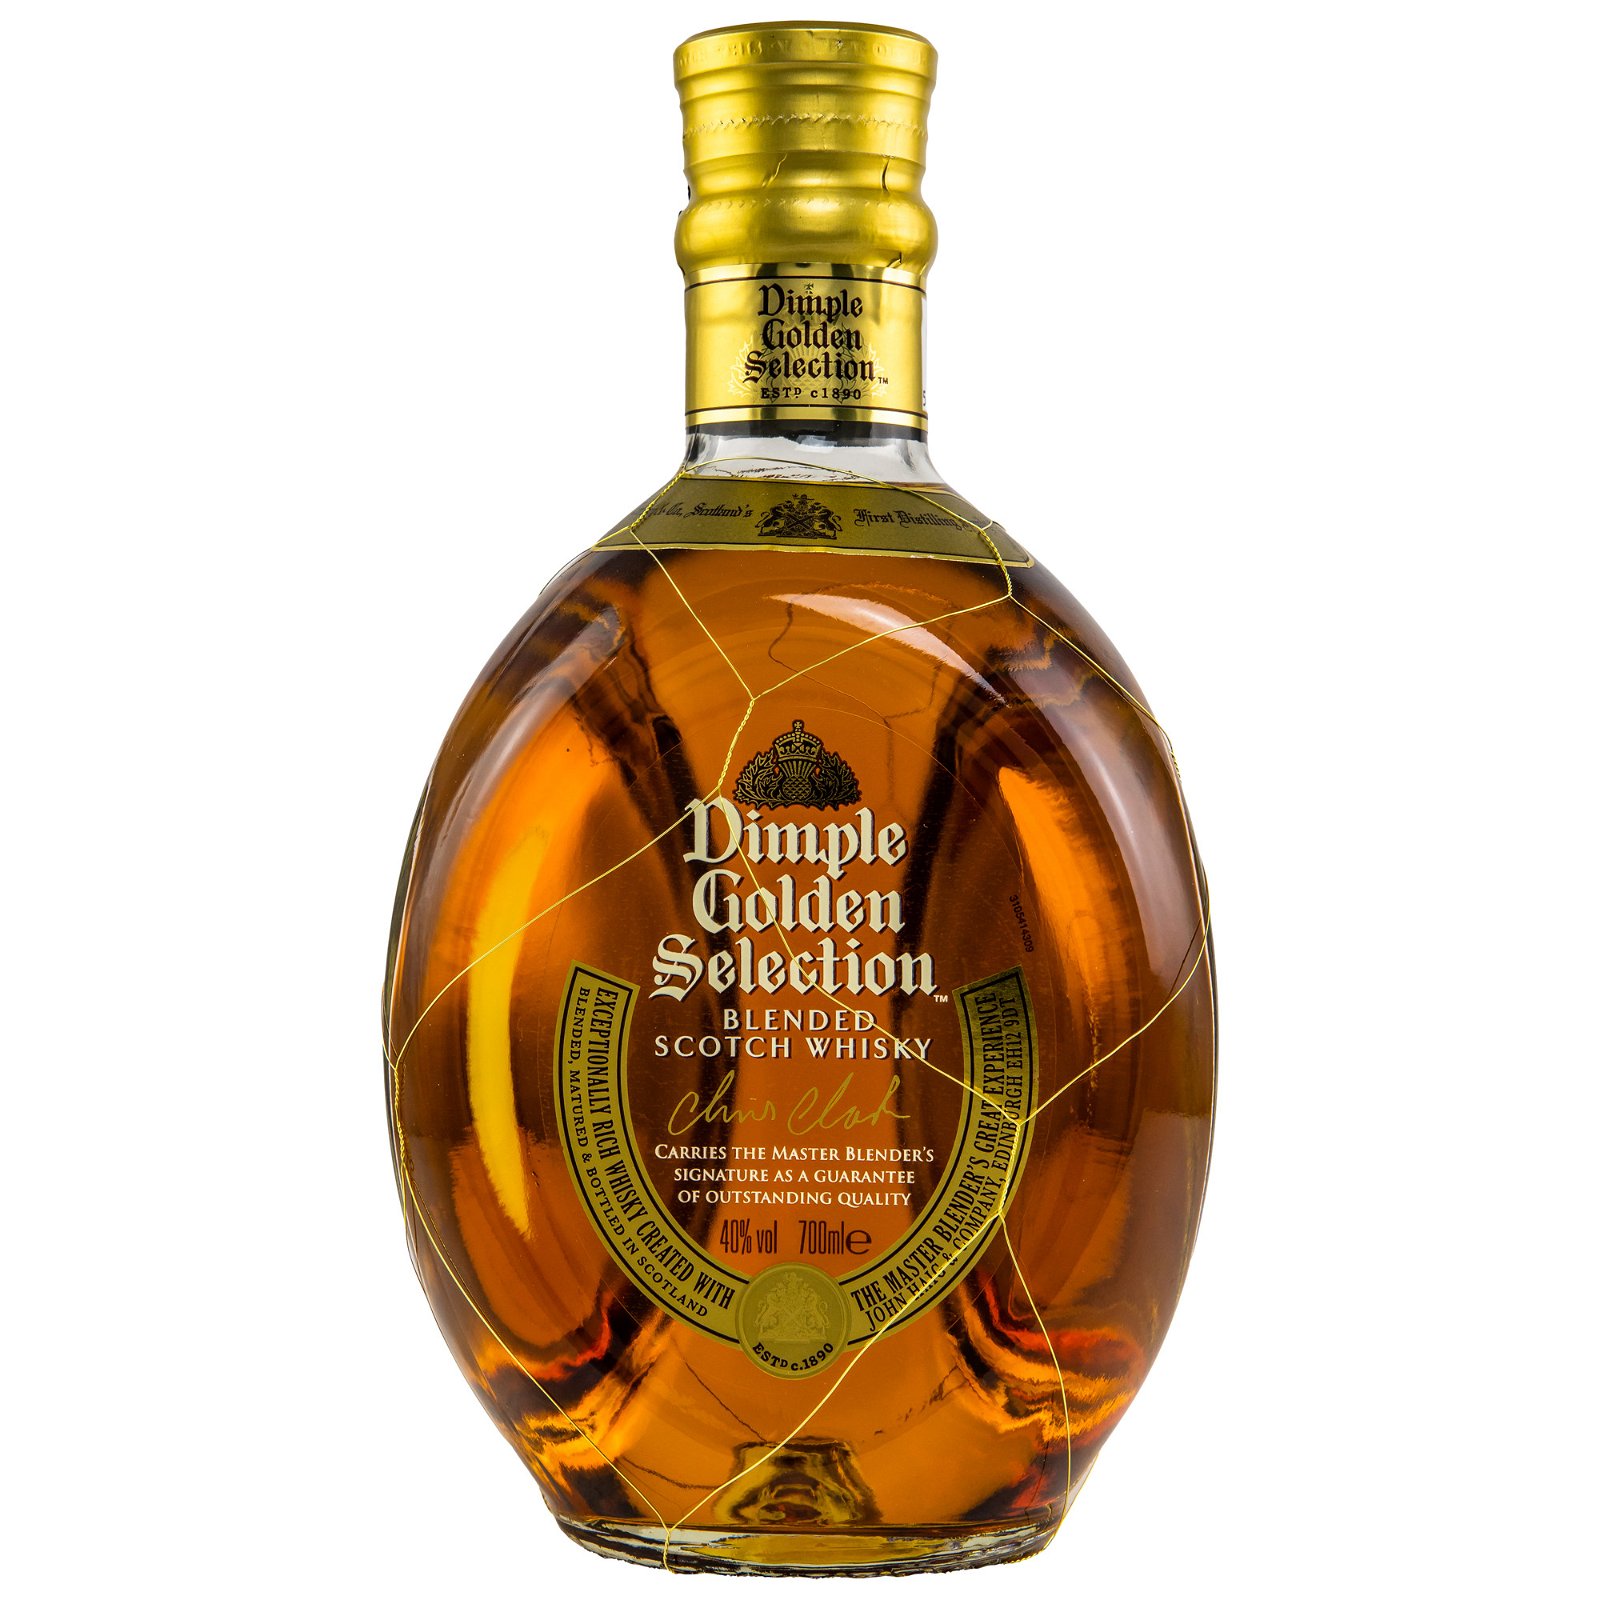 Dimple Golden Selection Blended Scotch